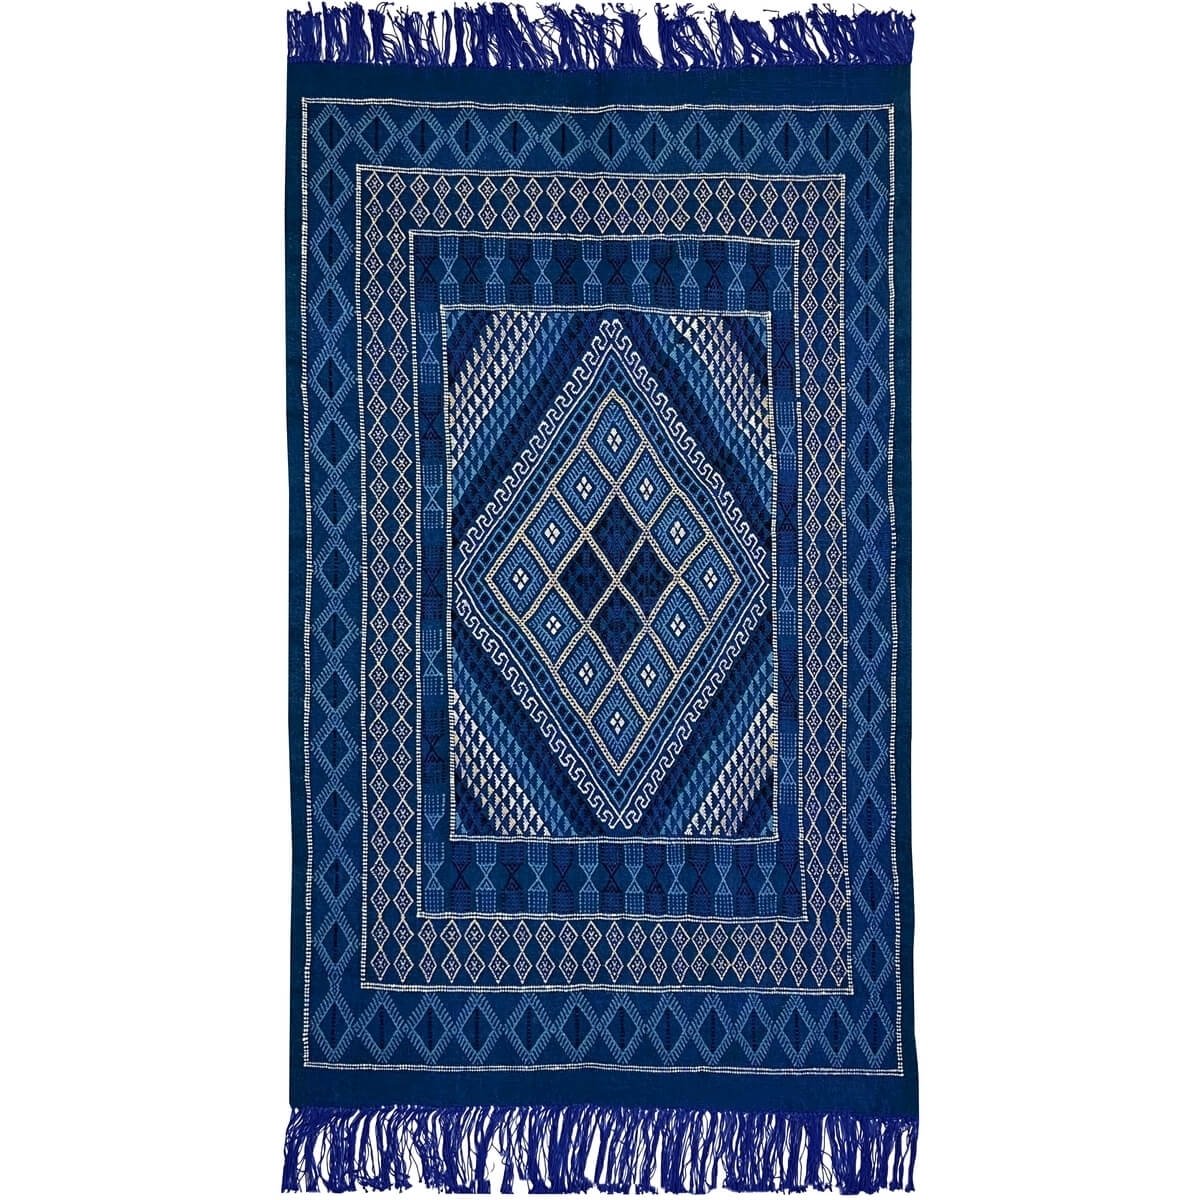 Berber carpet Rug Margoum Jed 120x212 cm Blue/White (Handmade, Wool, Tunisia) Tunisian margoum rug from the city of Kairouan. Re